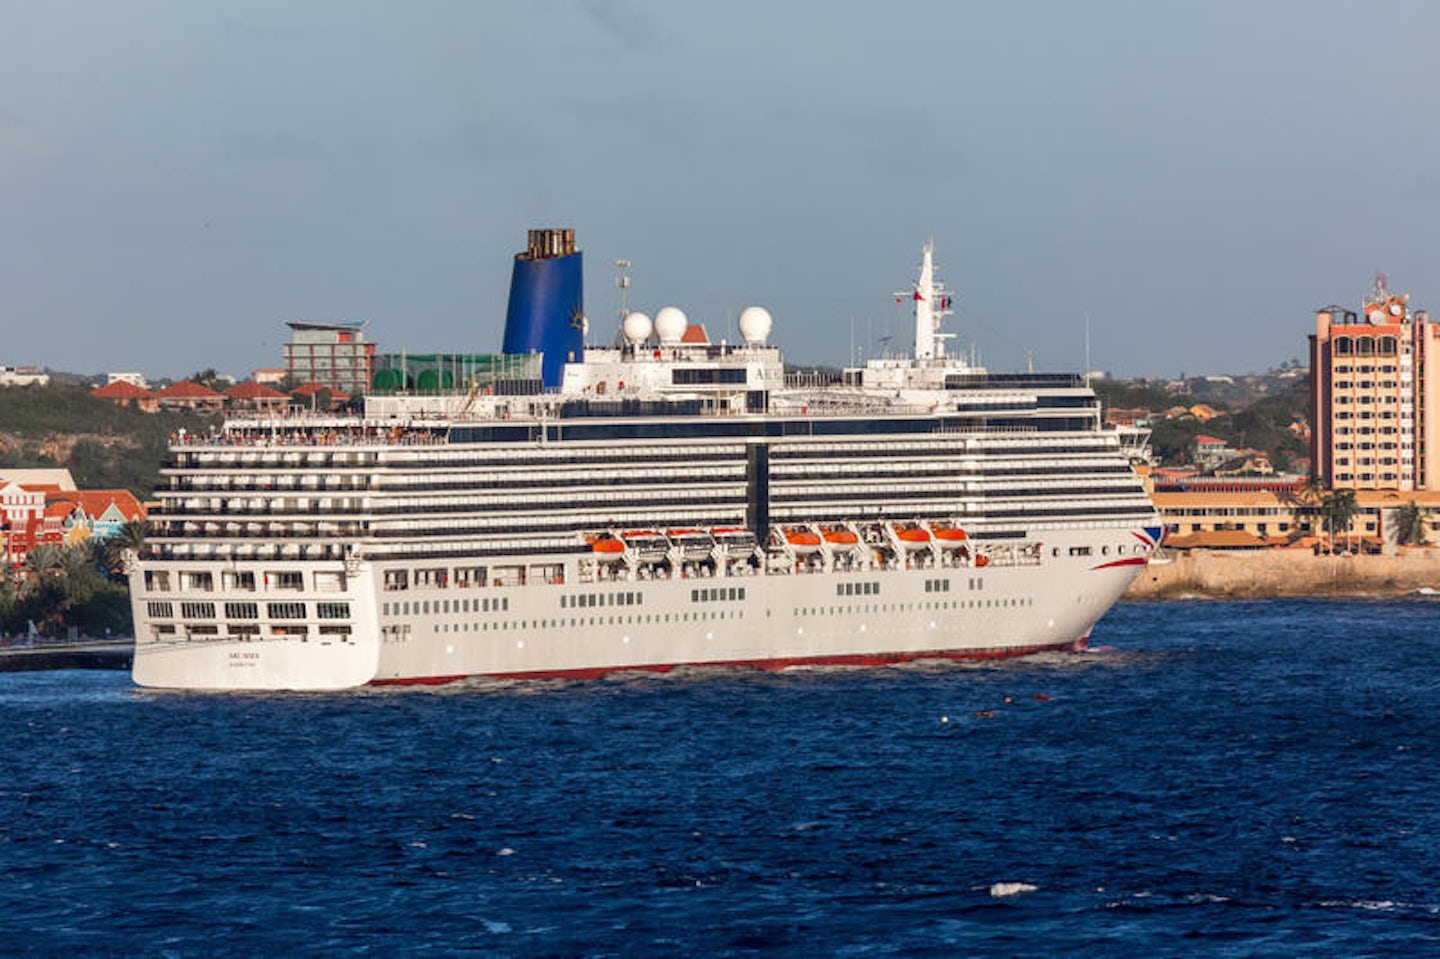 Willemstad Cruise Port